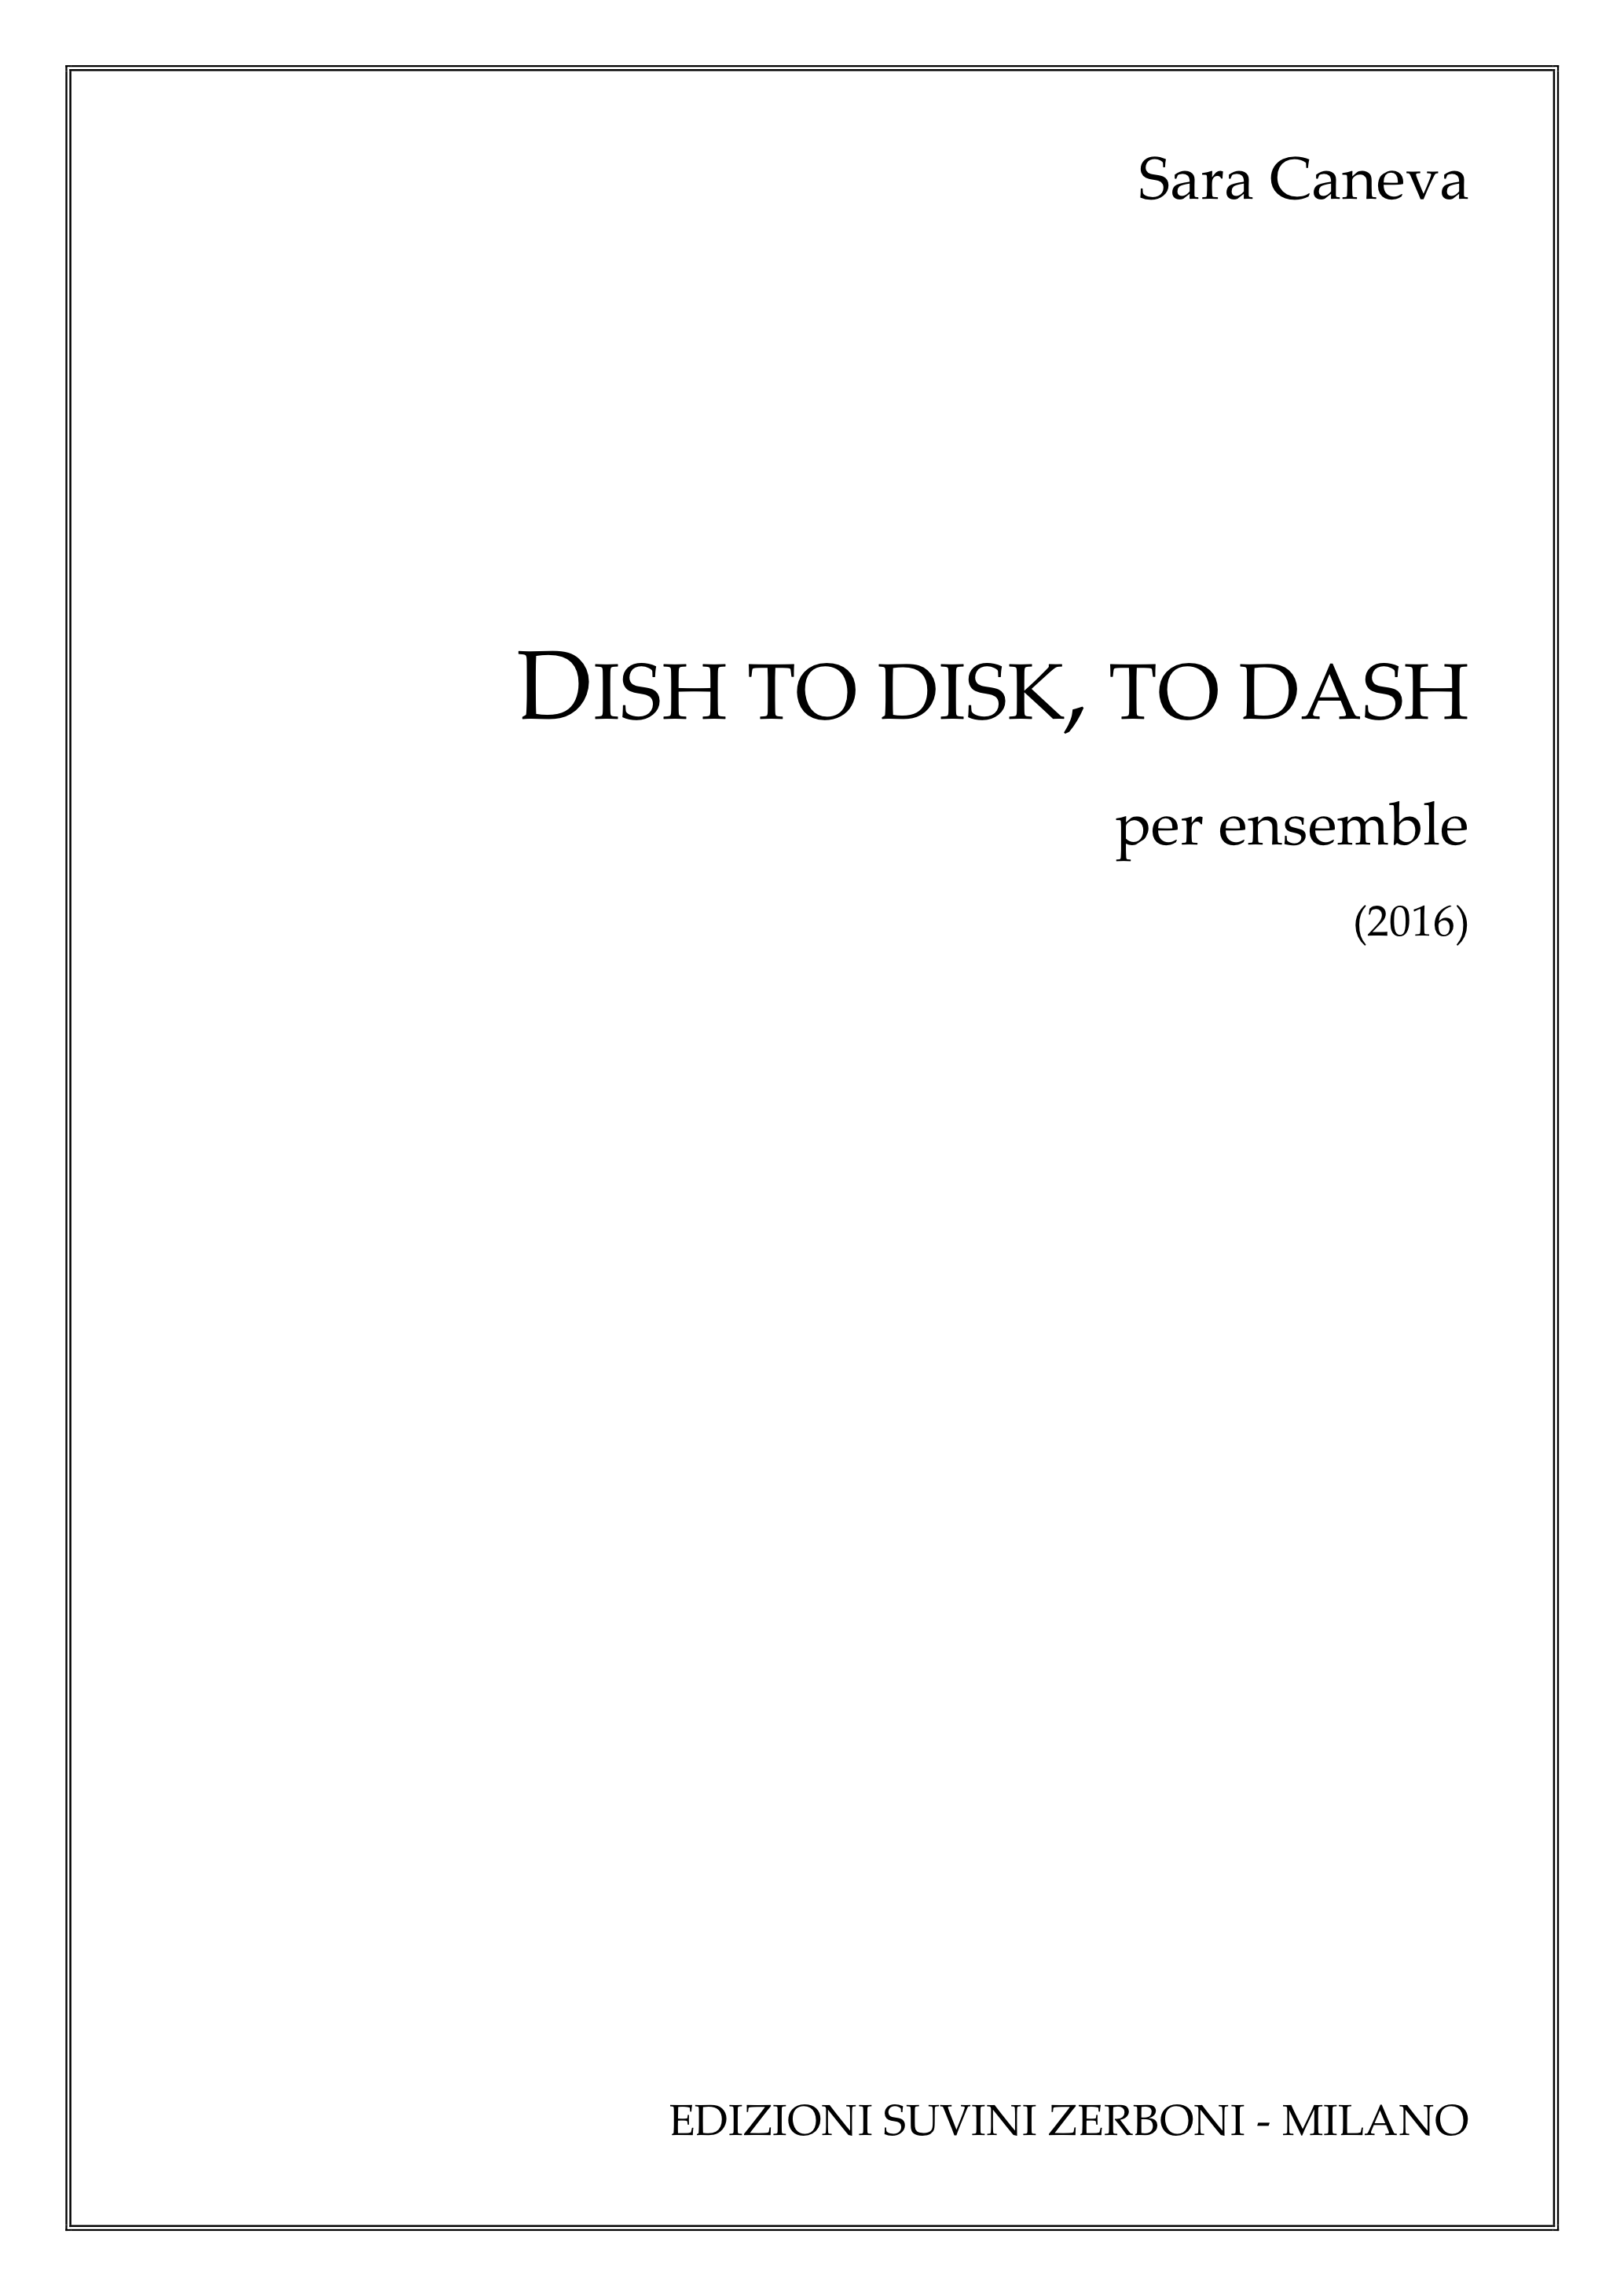 DISH to DISK to DASH_Caneva 1